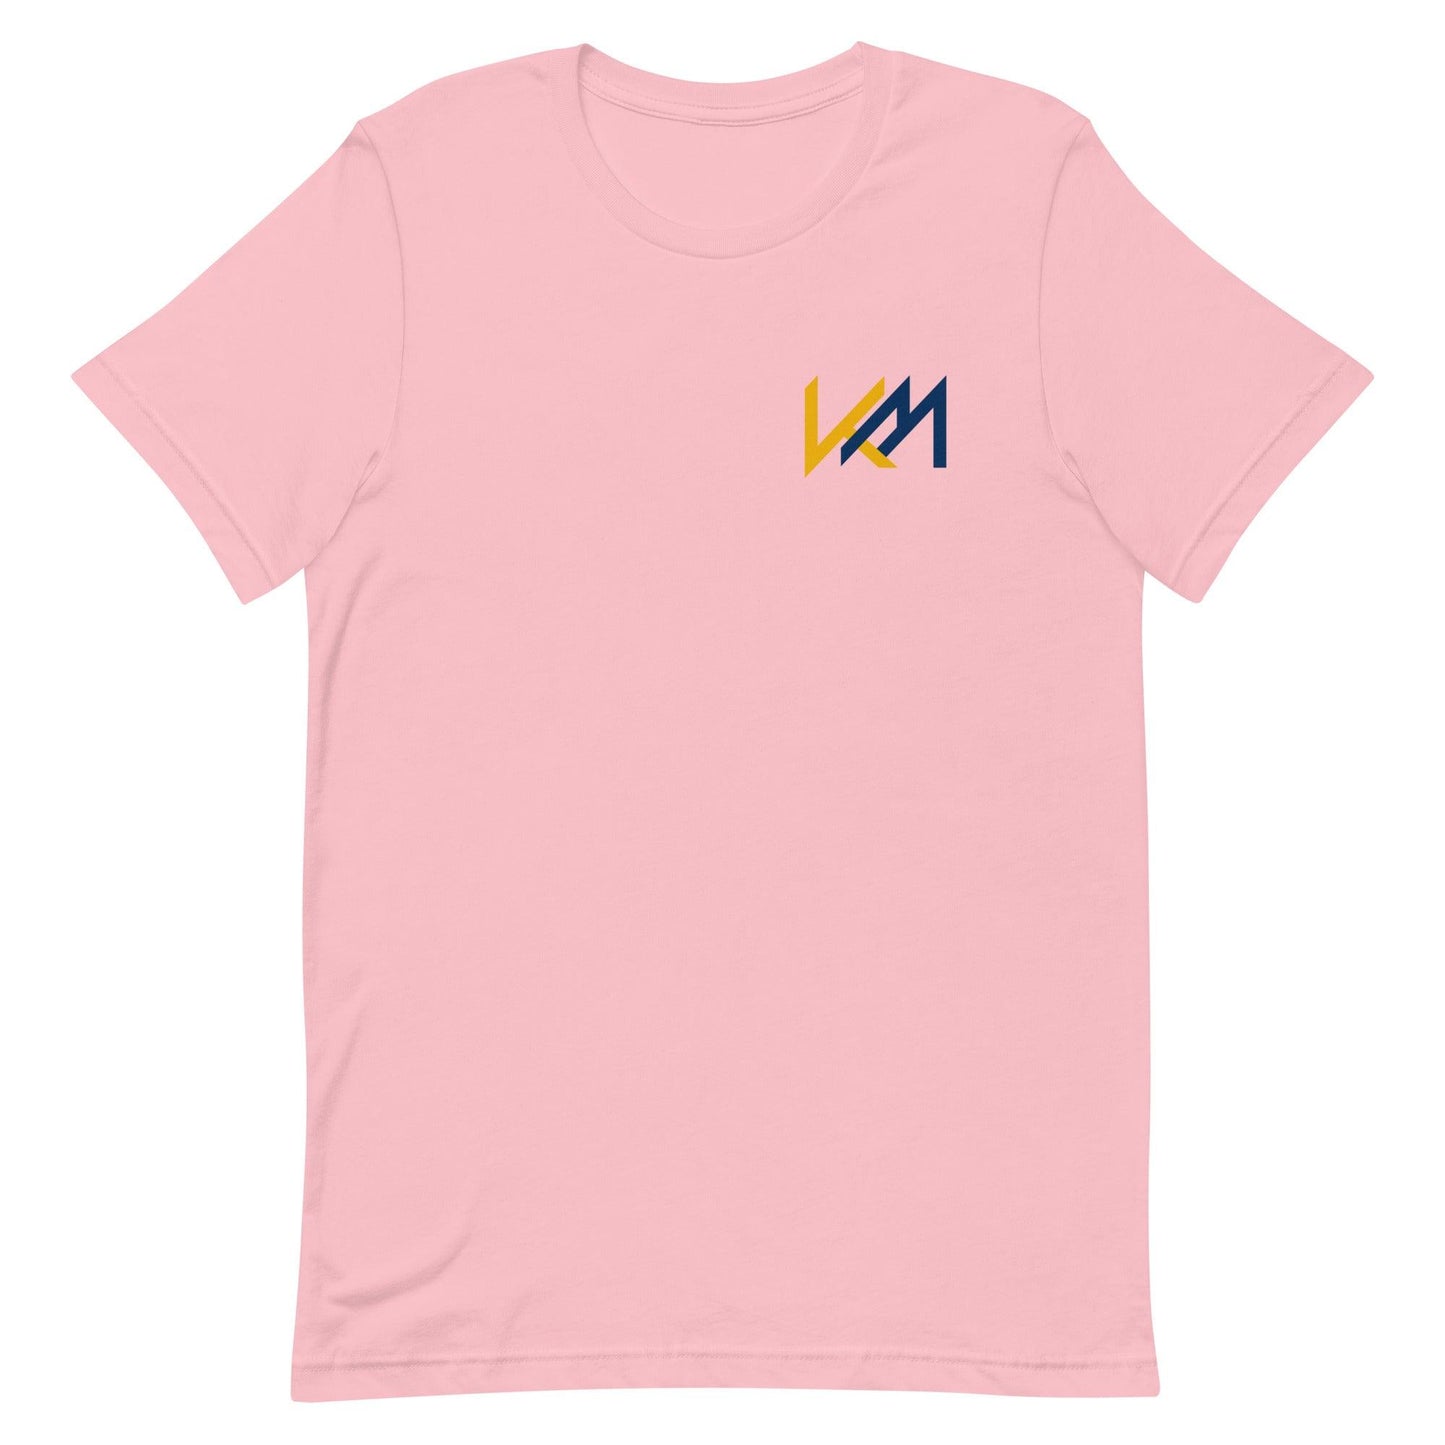 Kerry Martin "Essential" t-shirt - Fan Arch